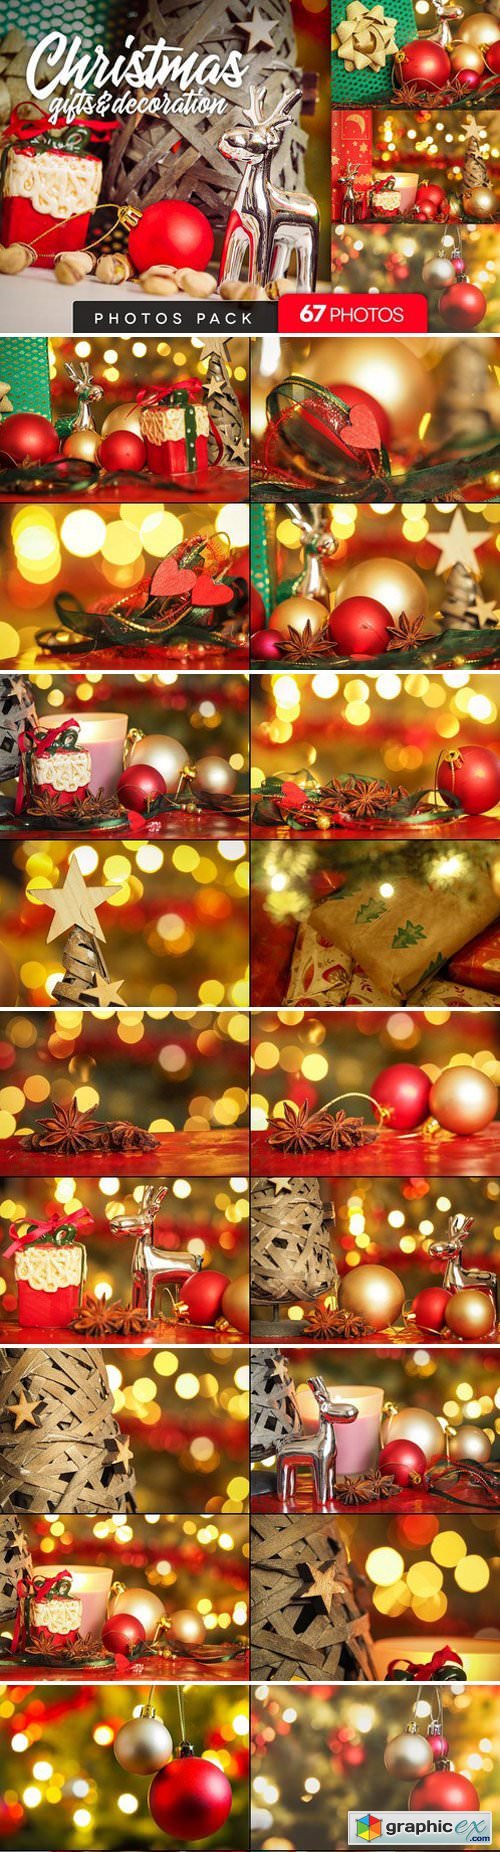 Christmas gifts & decoration /67pics